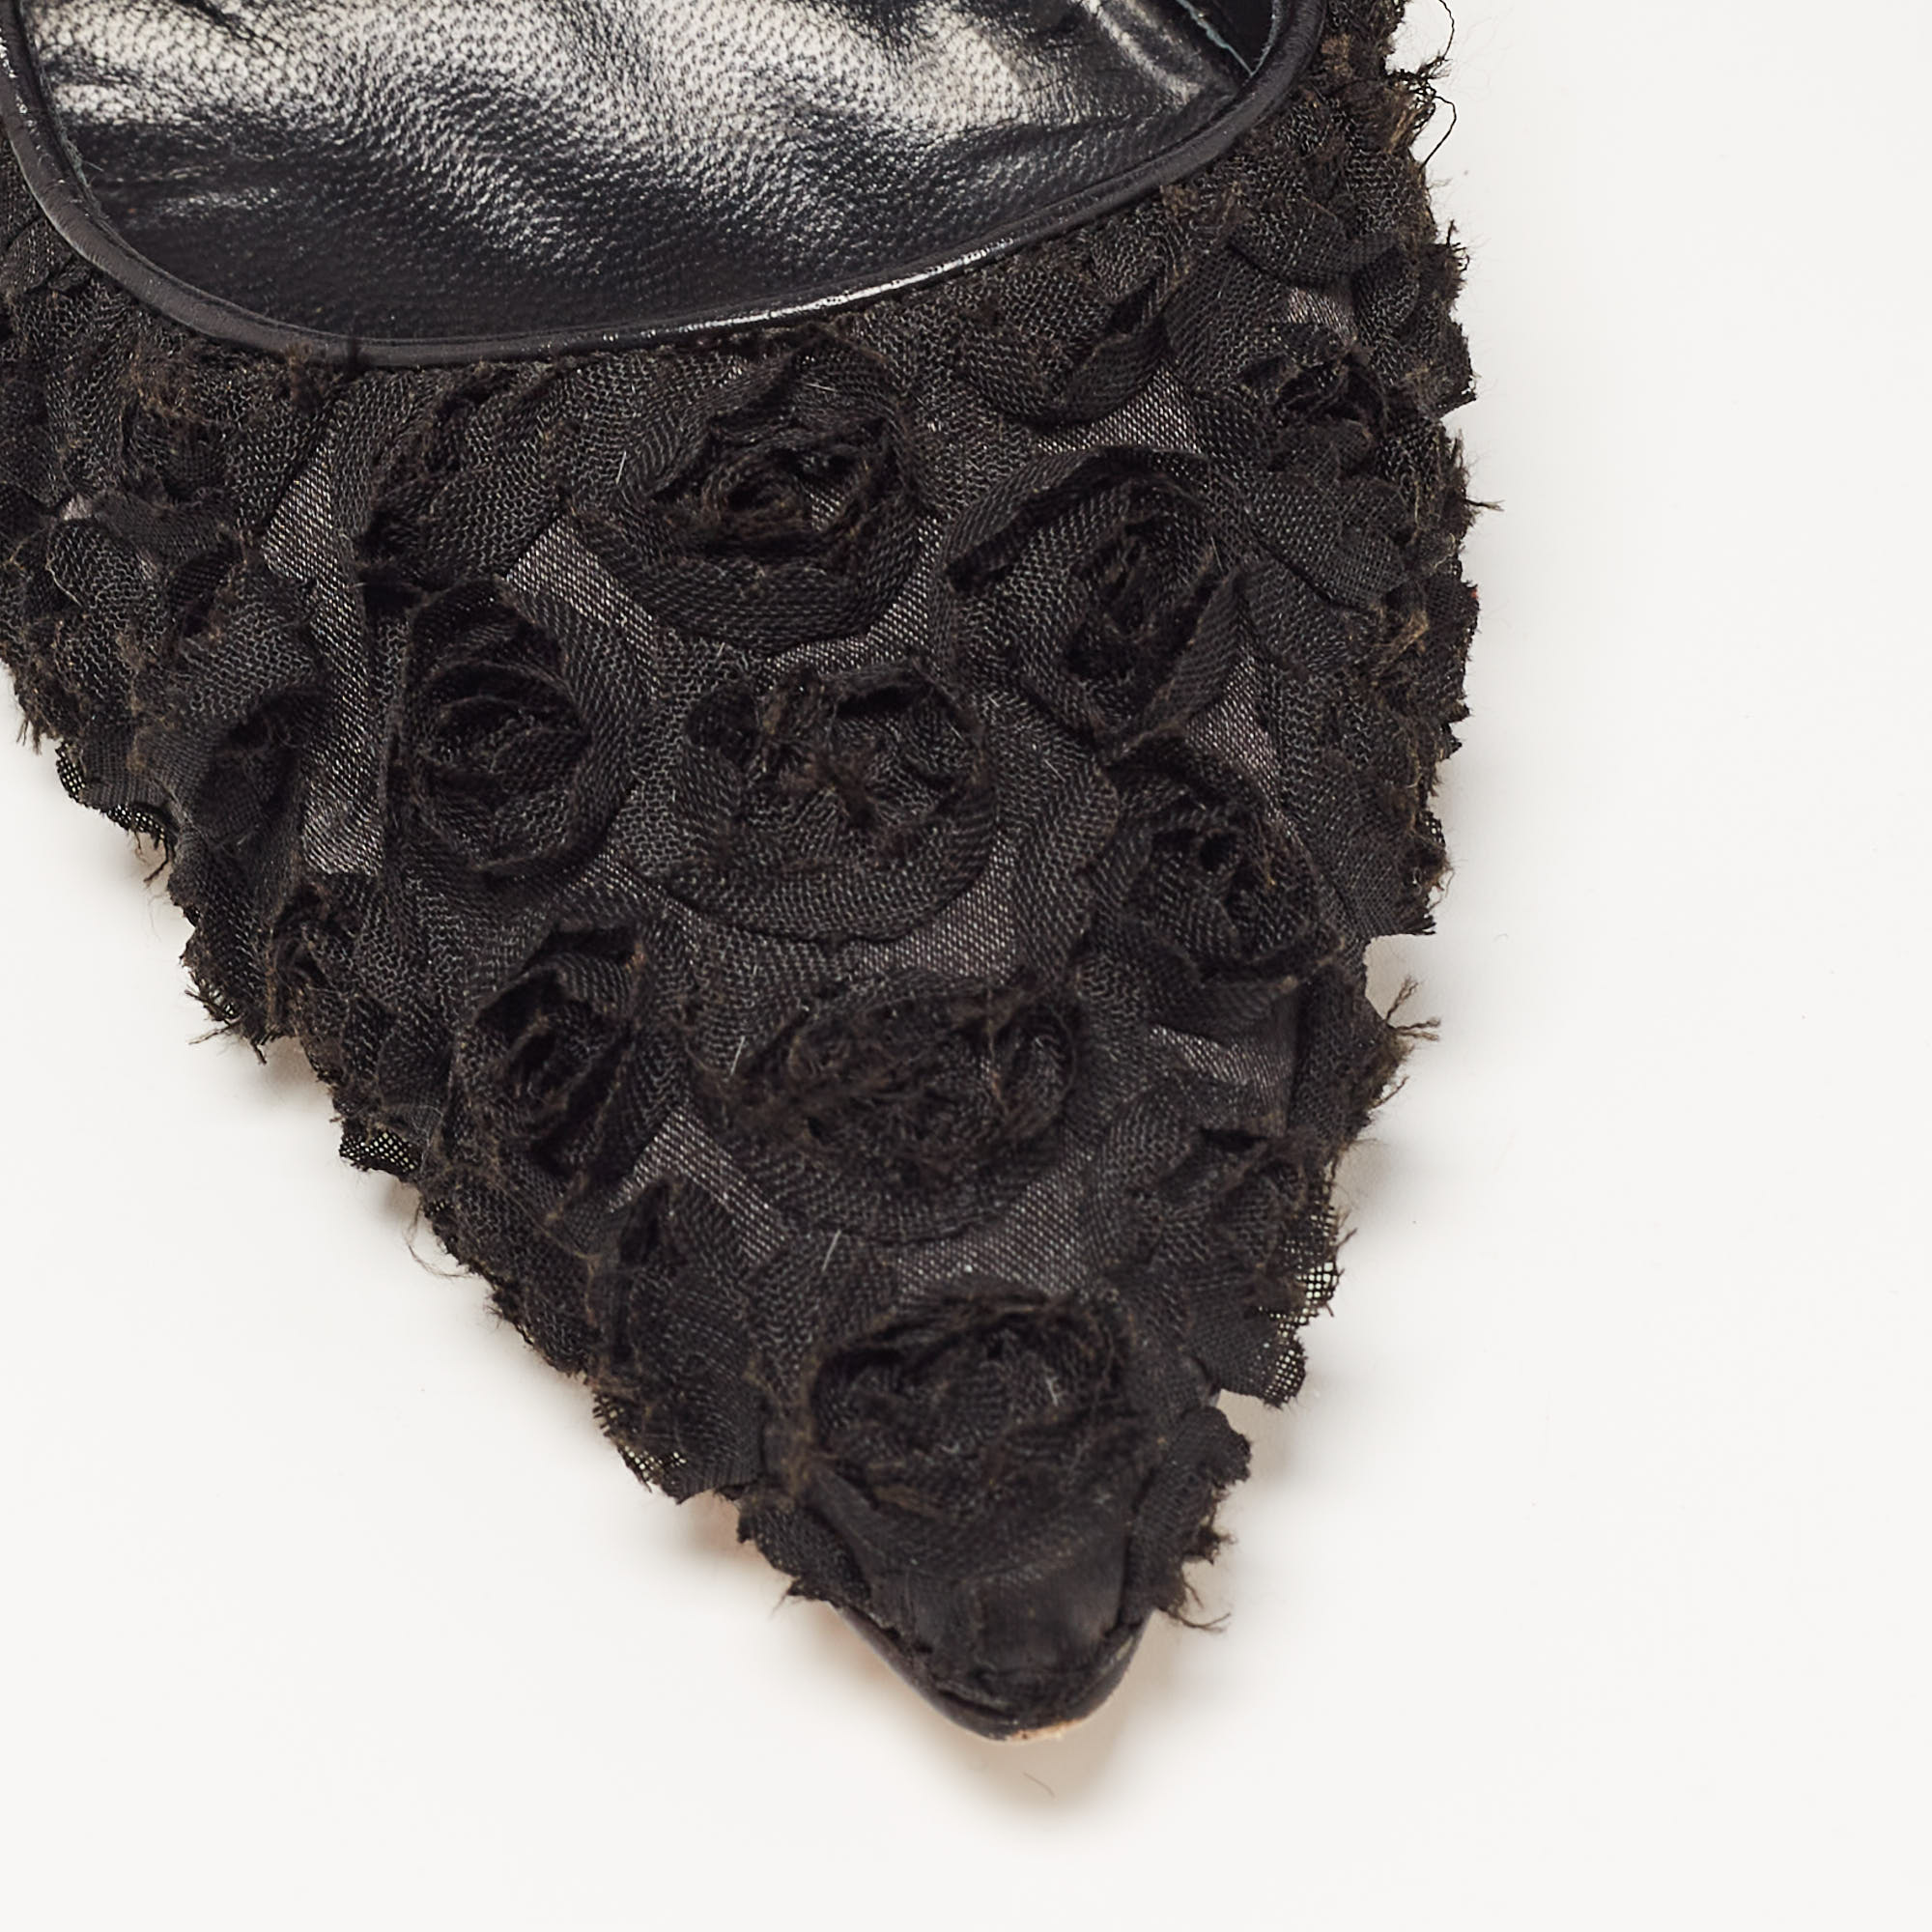 Manolo Blahnik Black Floral Lace Pointed Toe Pumps Size 39